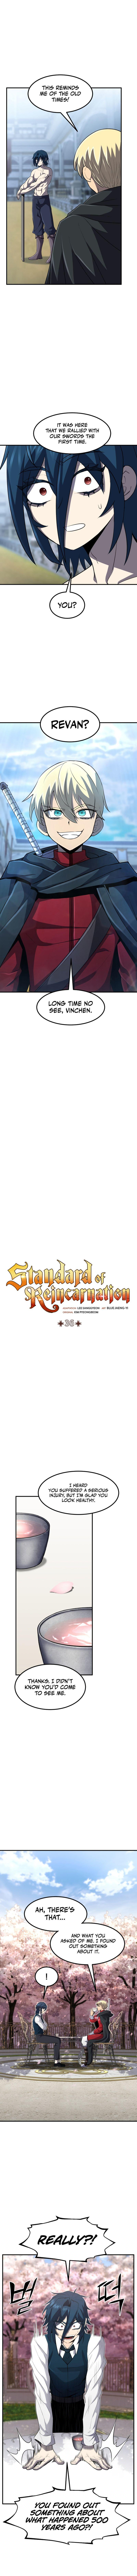 Standard Of Reincarnation Chapter 36 page 2 - standardofreincarnation.com